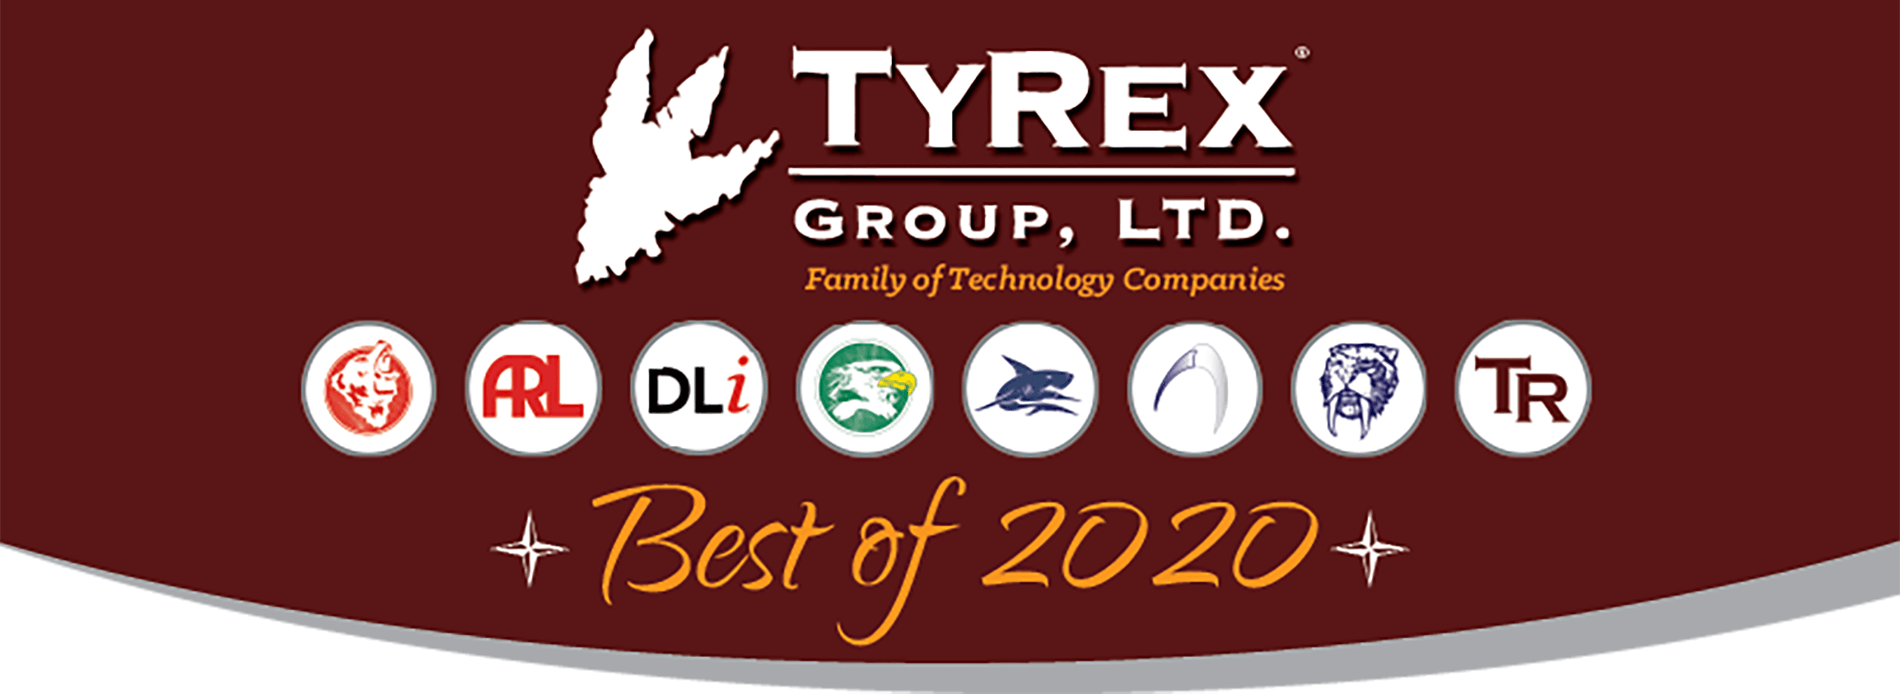 TyRex Family Best of Header Graphic